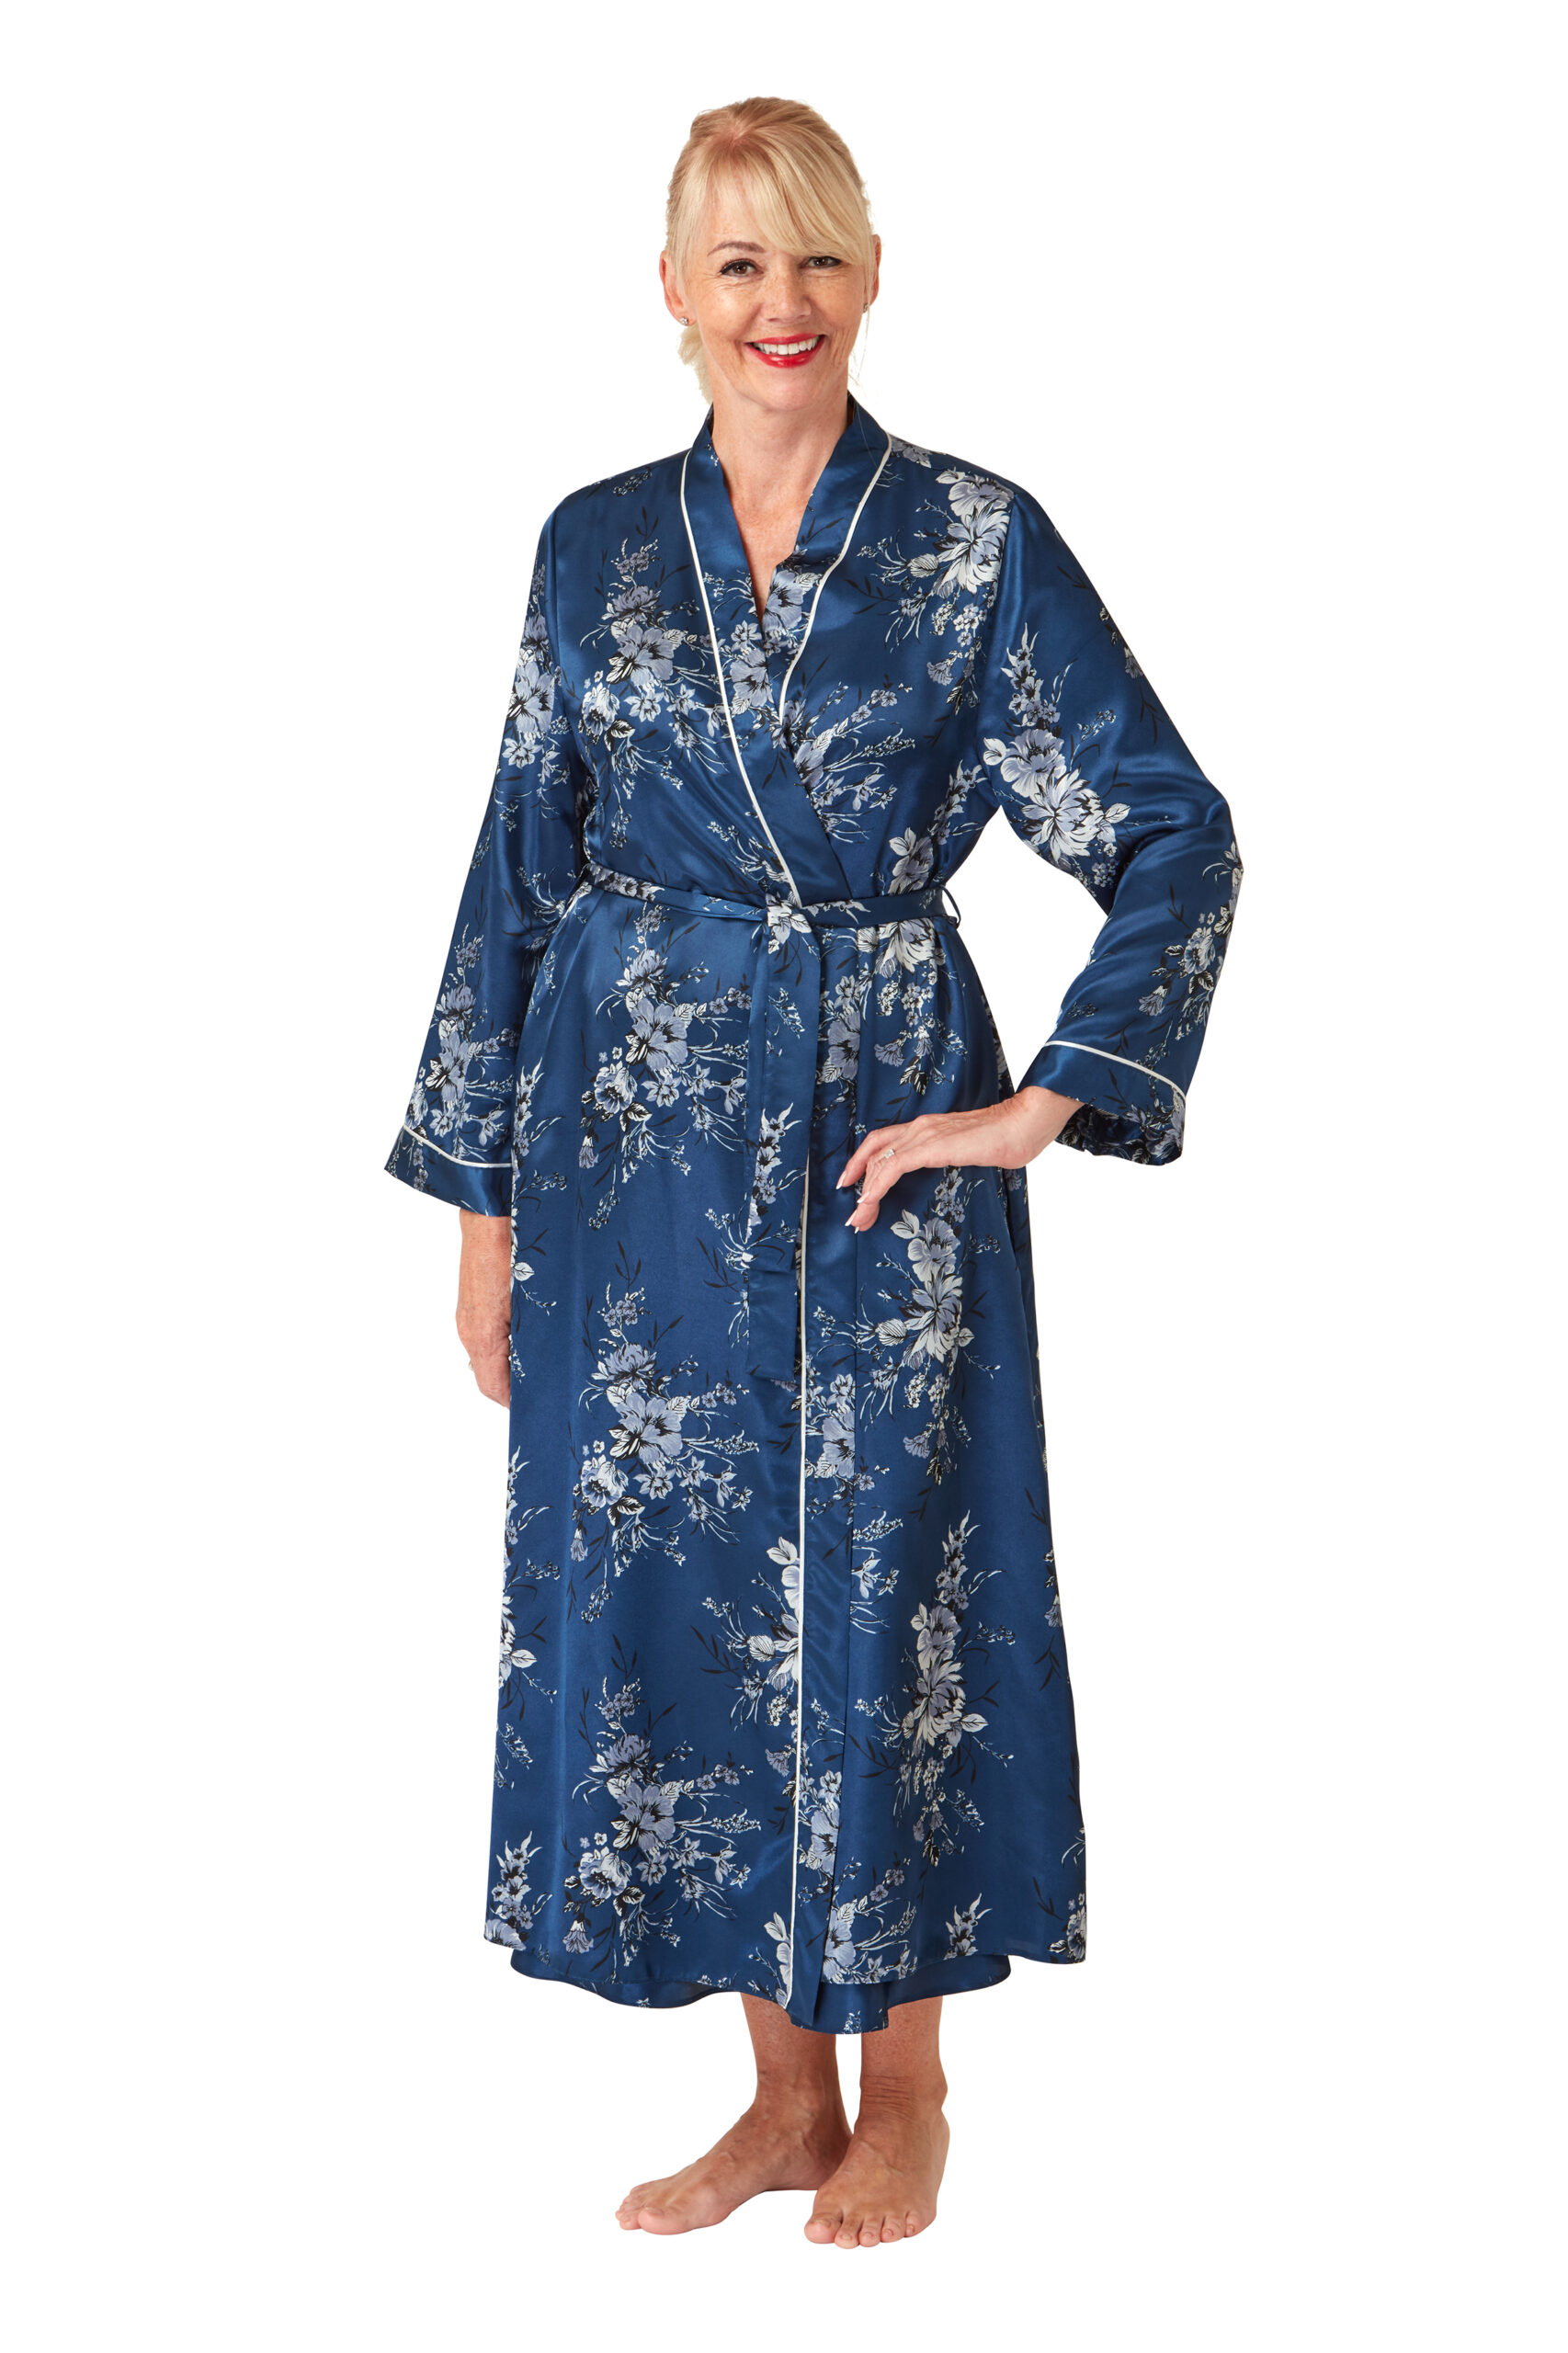 LORETA - Hush Scuba Fabric Dress $129.95 (If between